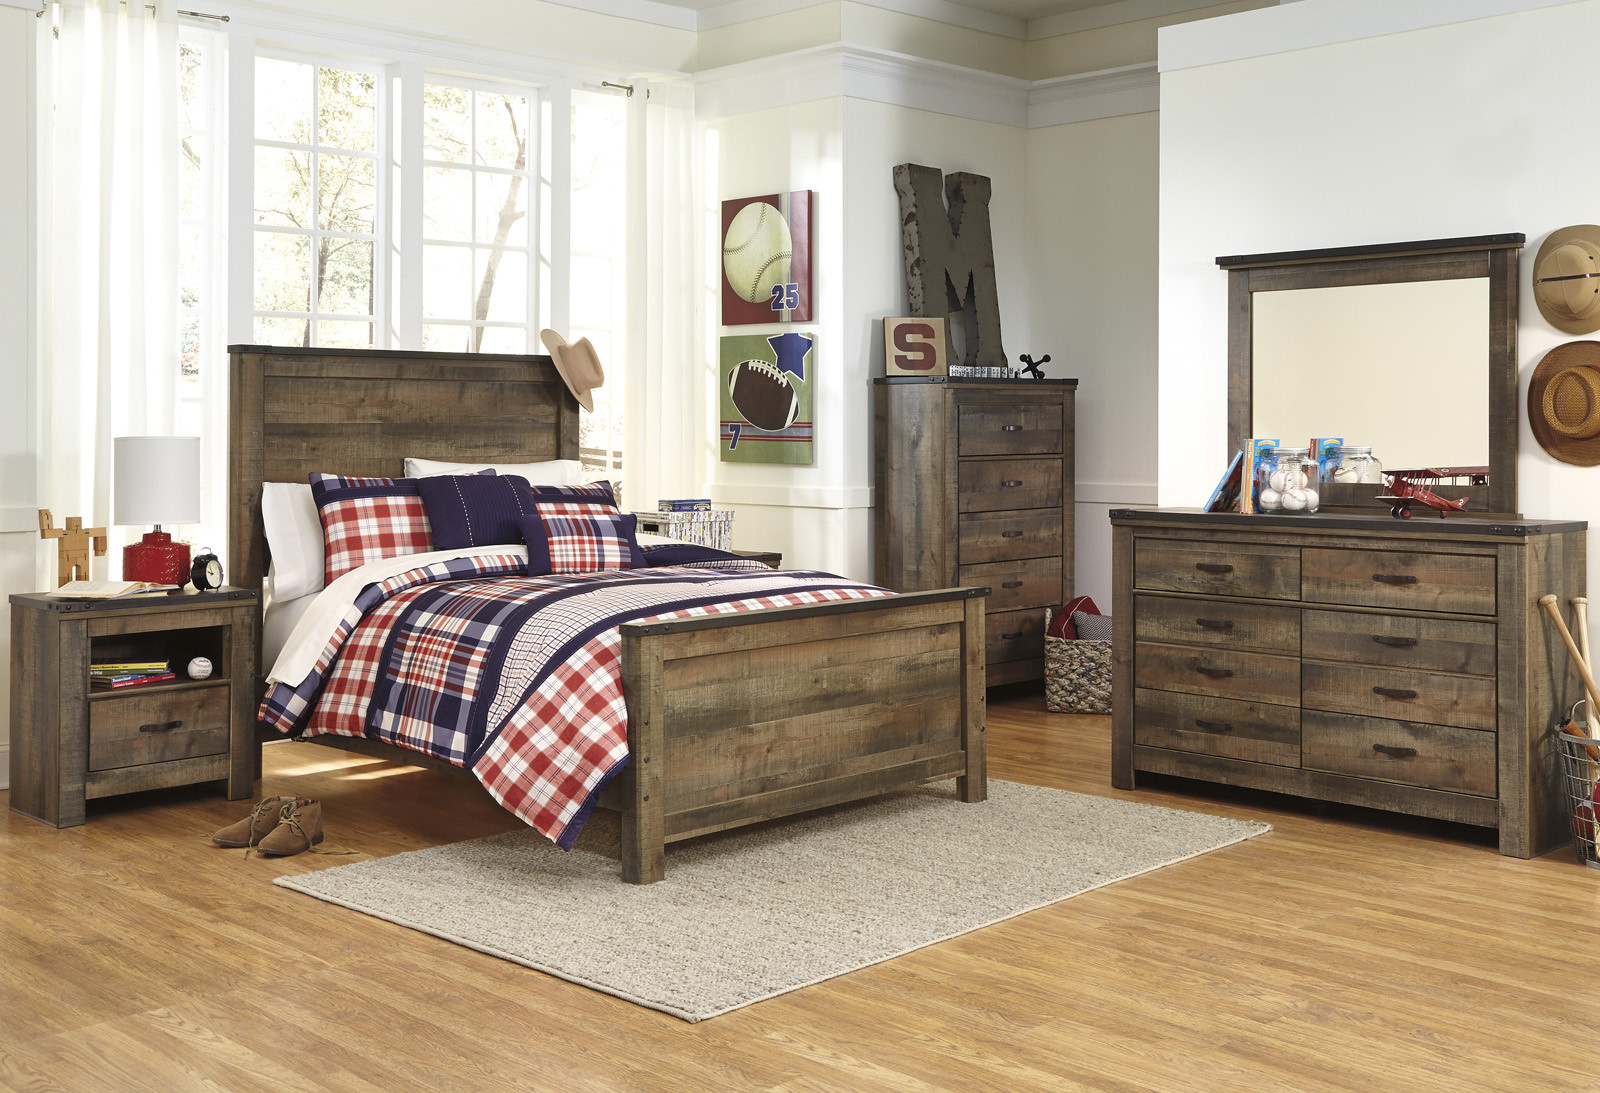 Rustic Bedroom Sets
 Trinell 4 Piece Panel Bedroom Set in Warm Rustic Oak